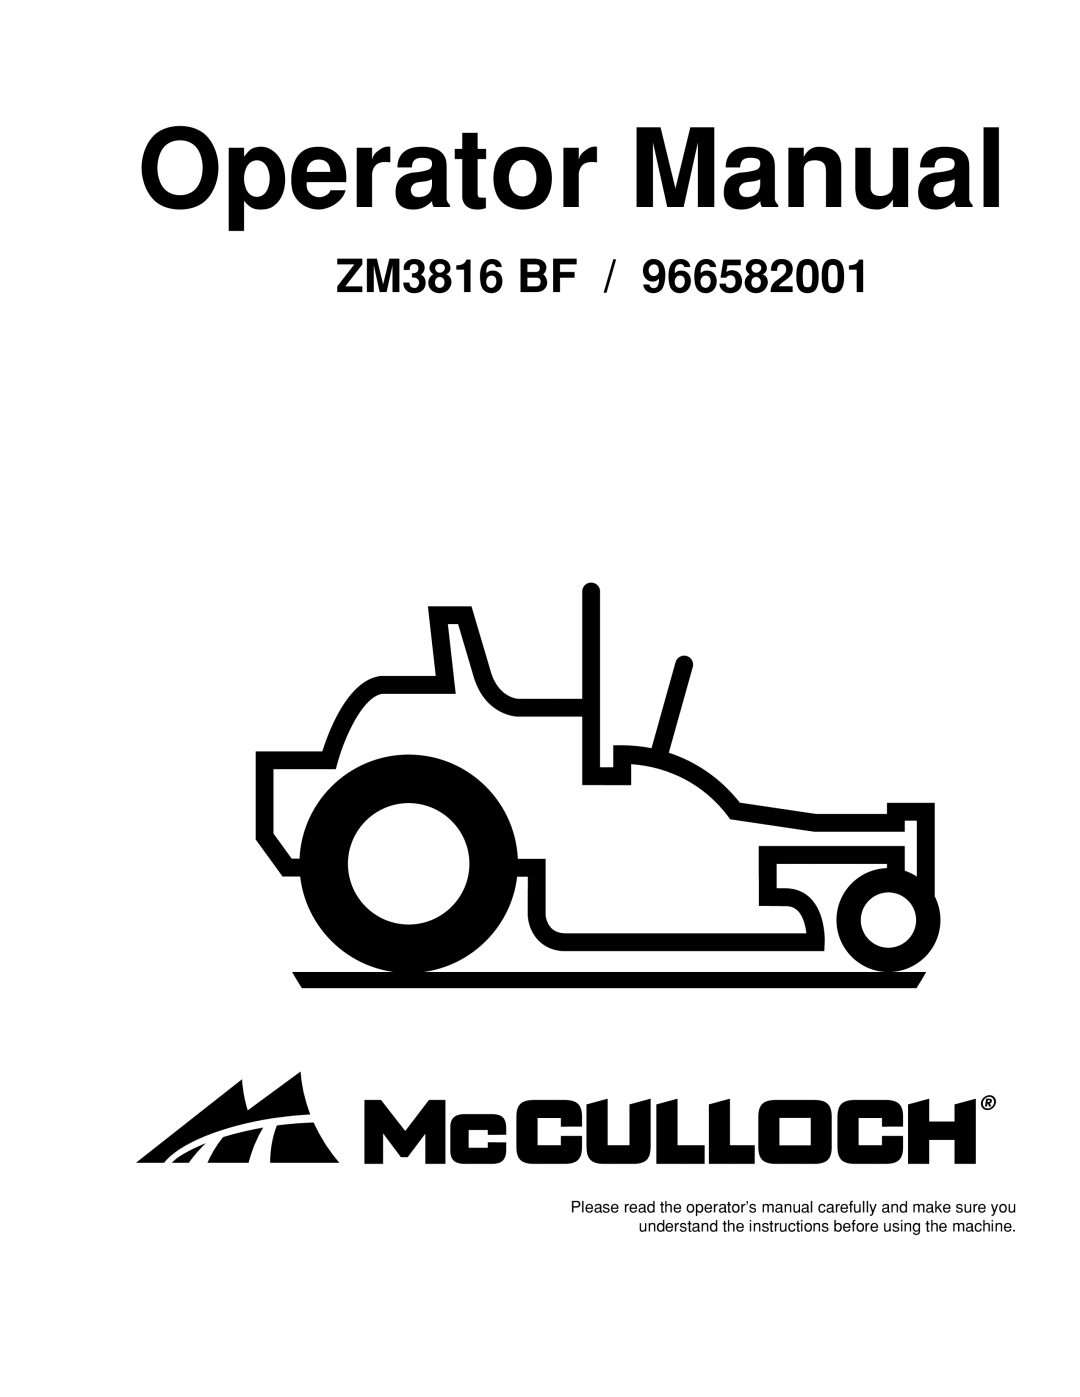 McCulloch 966582001 manual Operator Manual, ZM3816 BF 